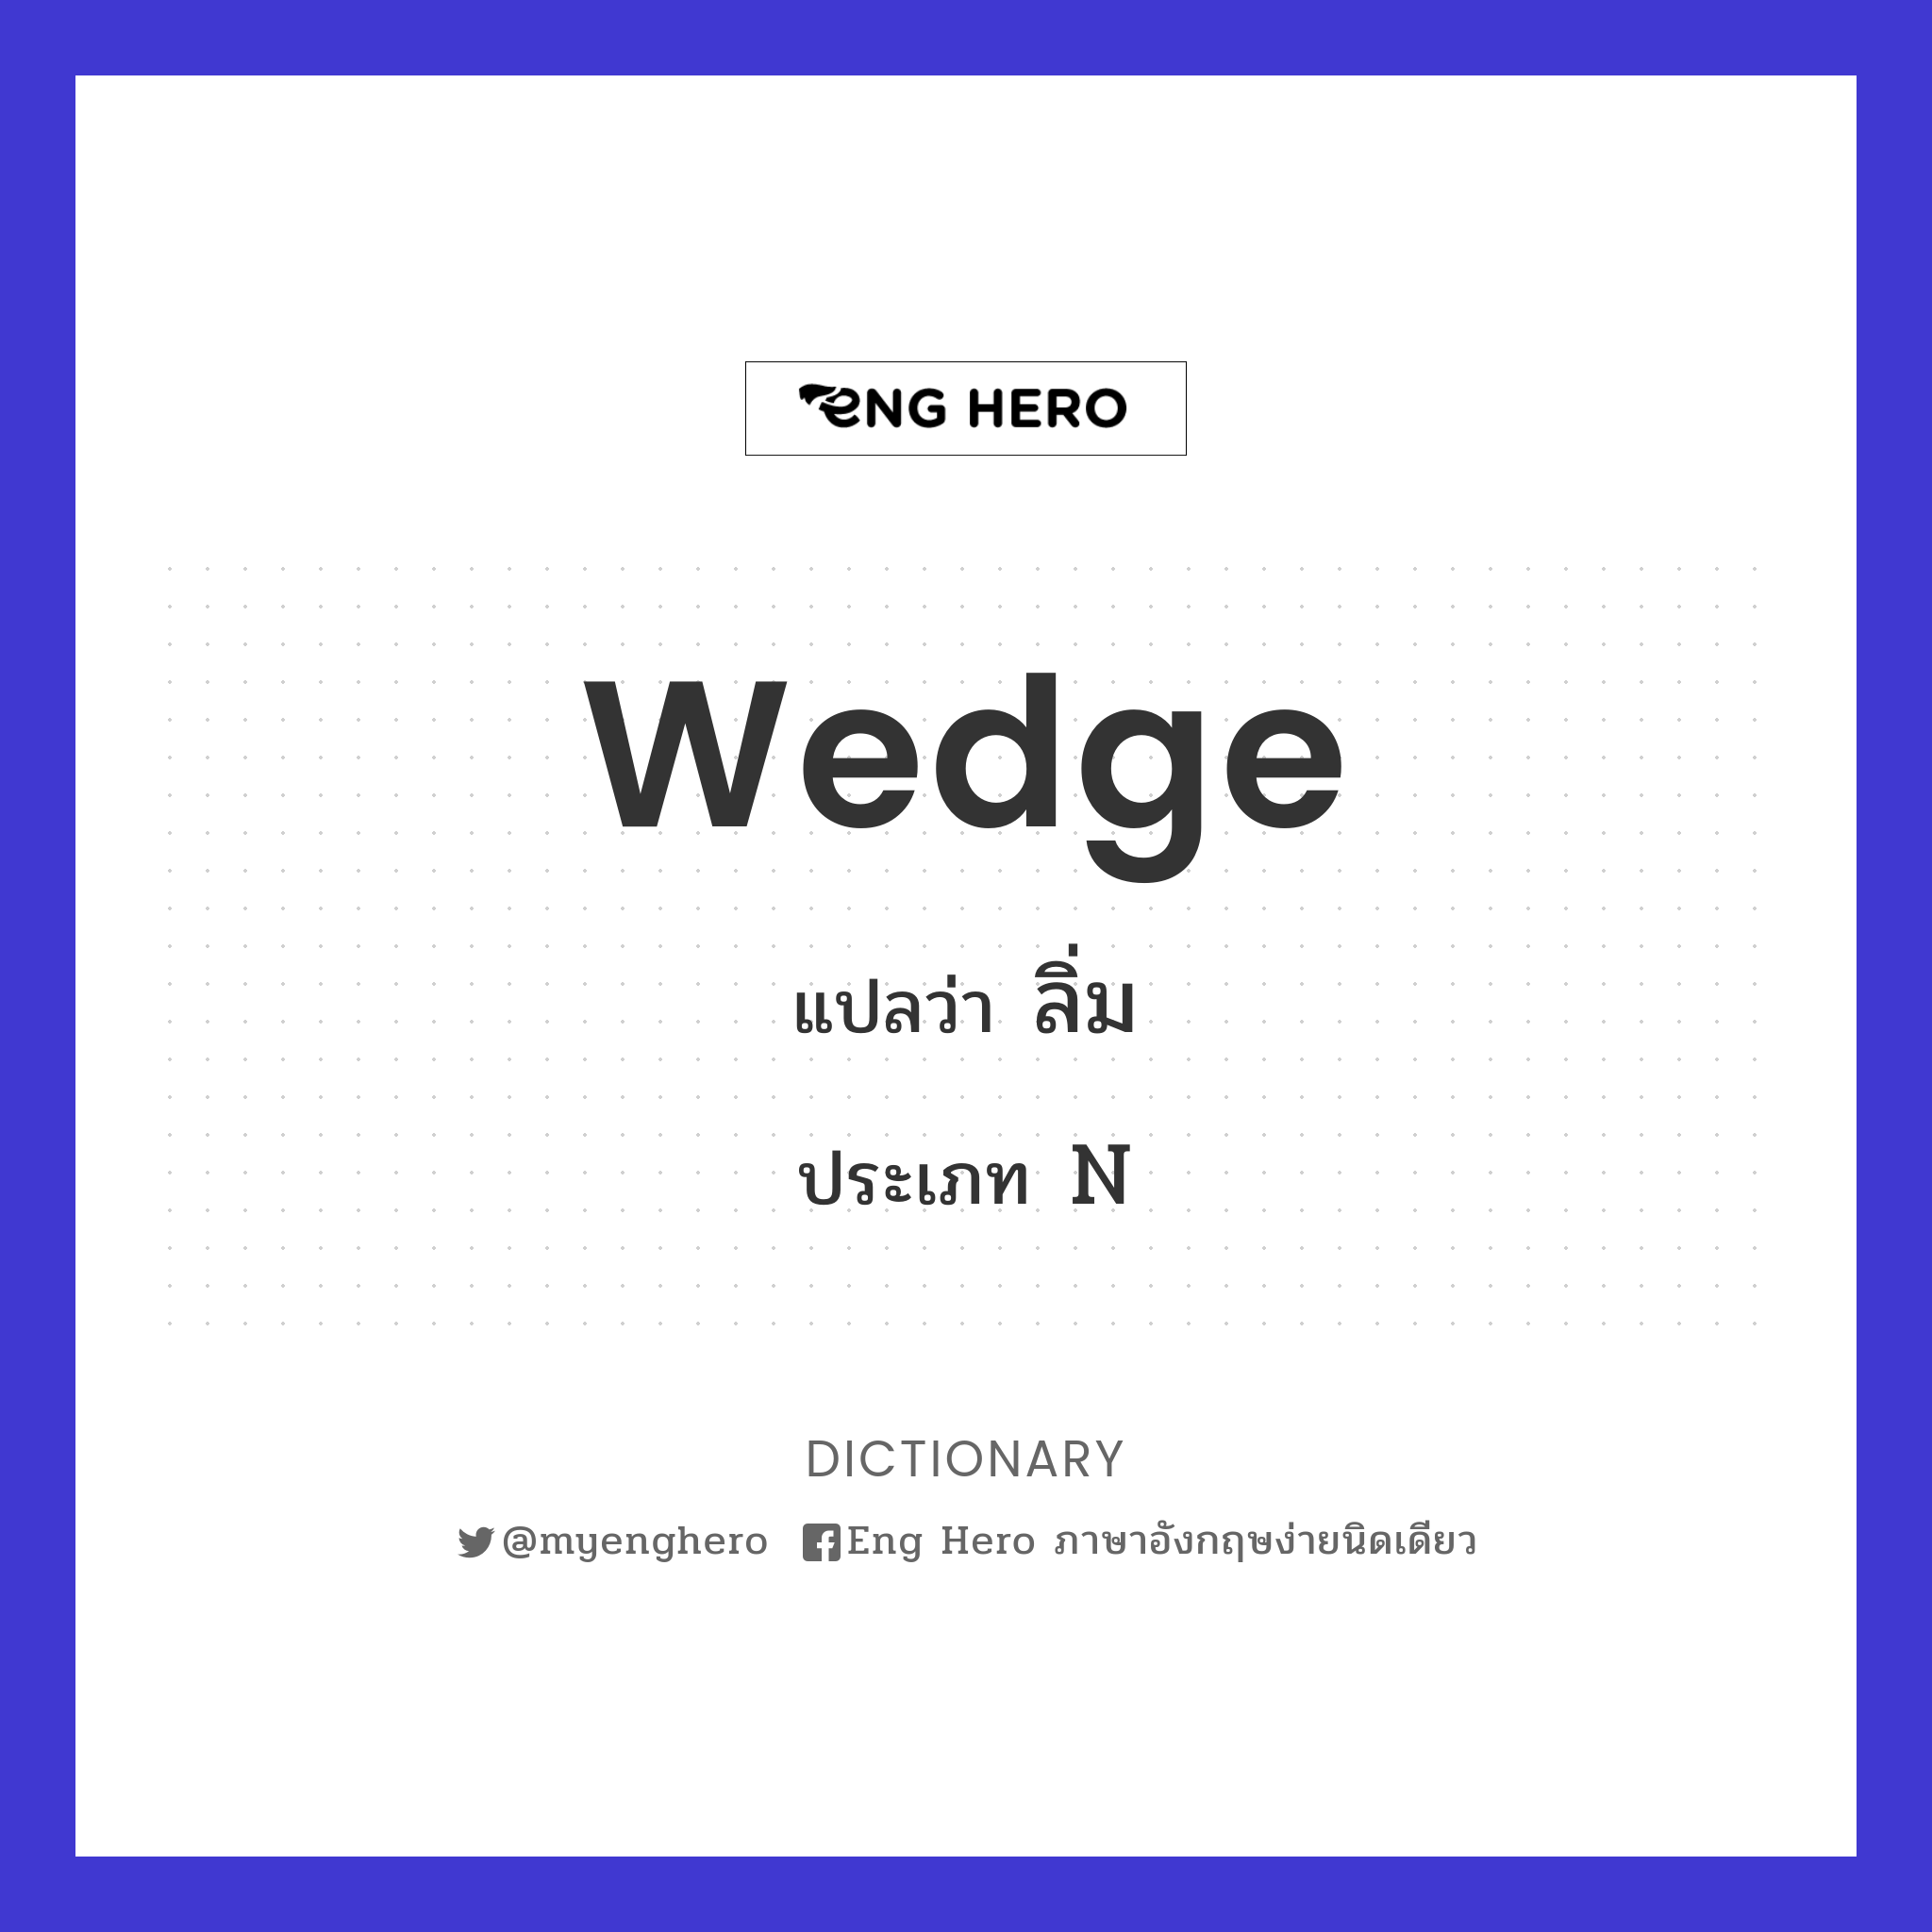 wedge